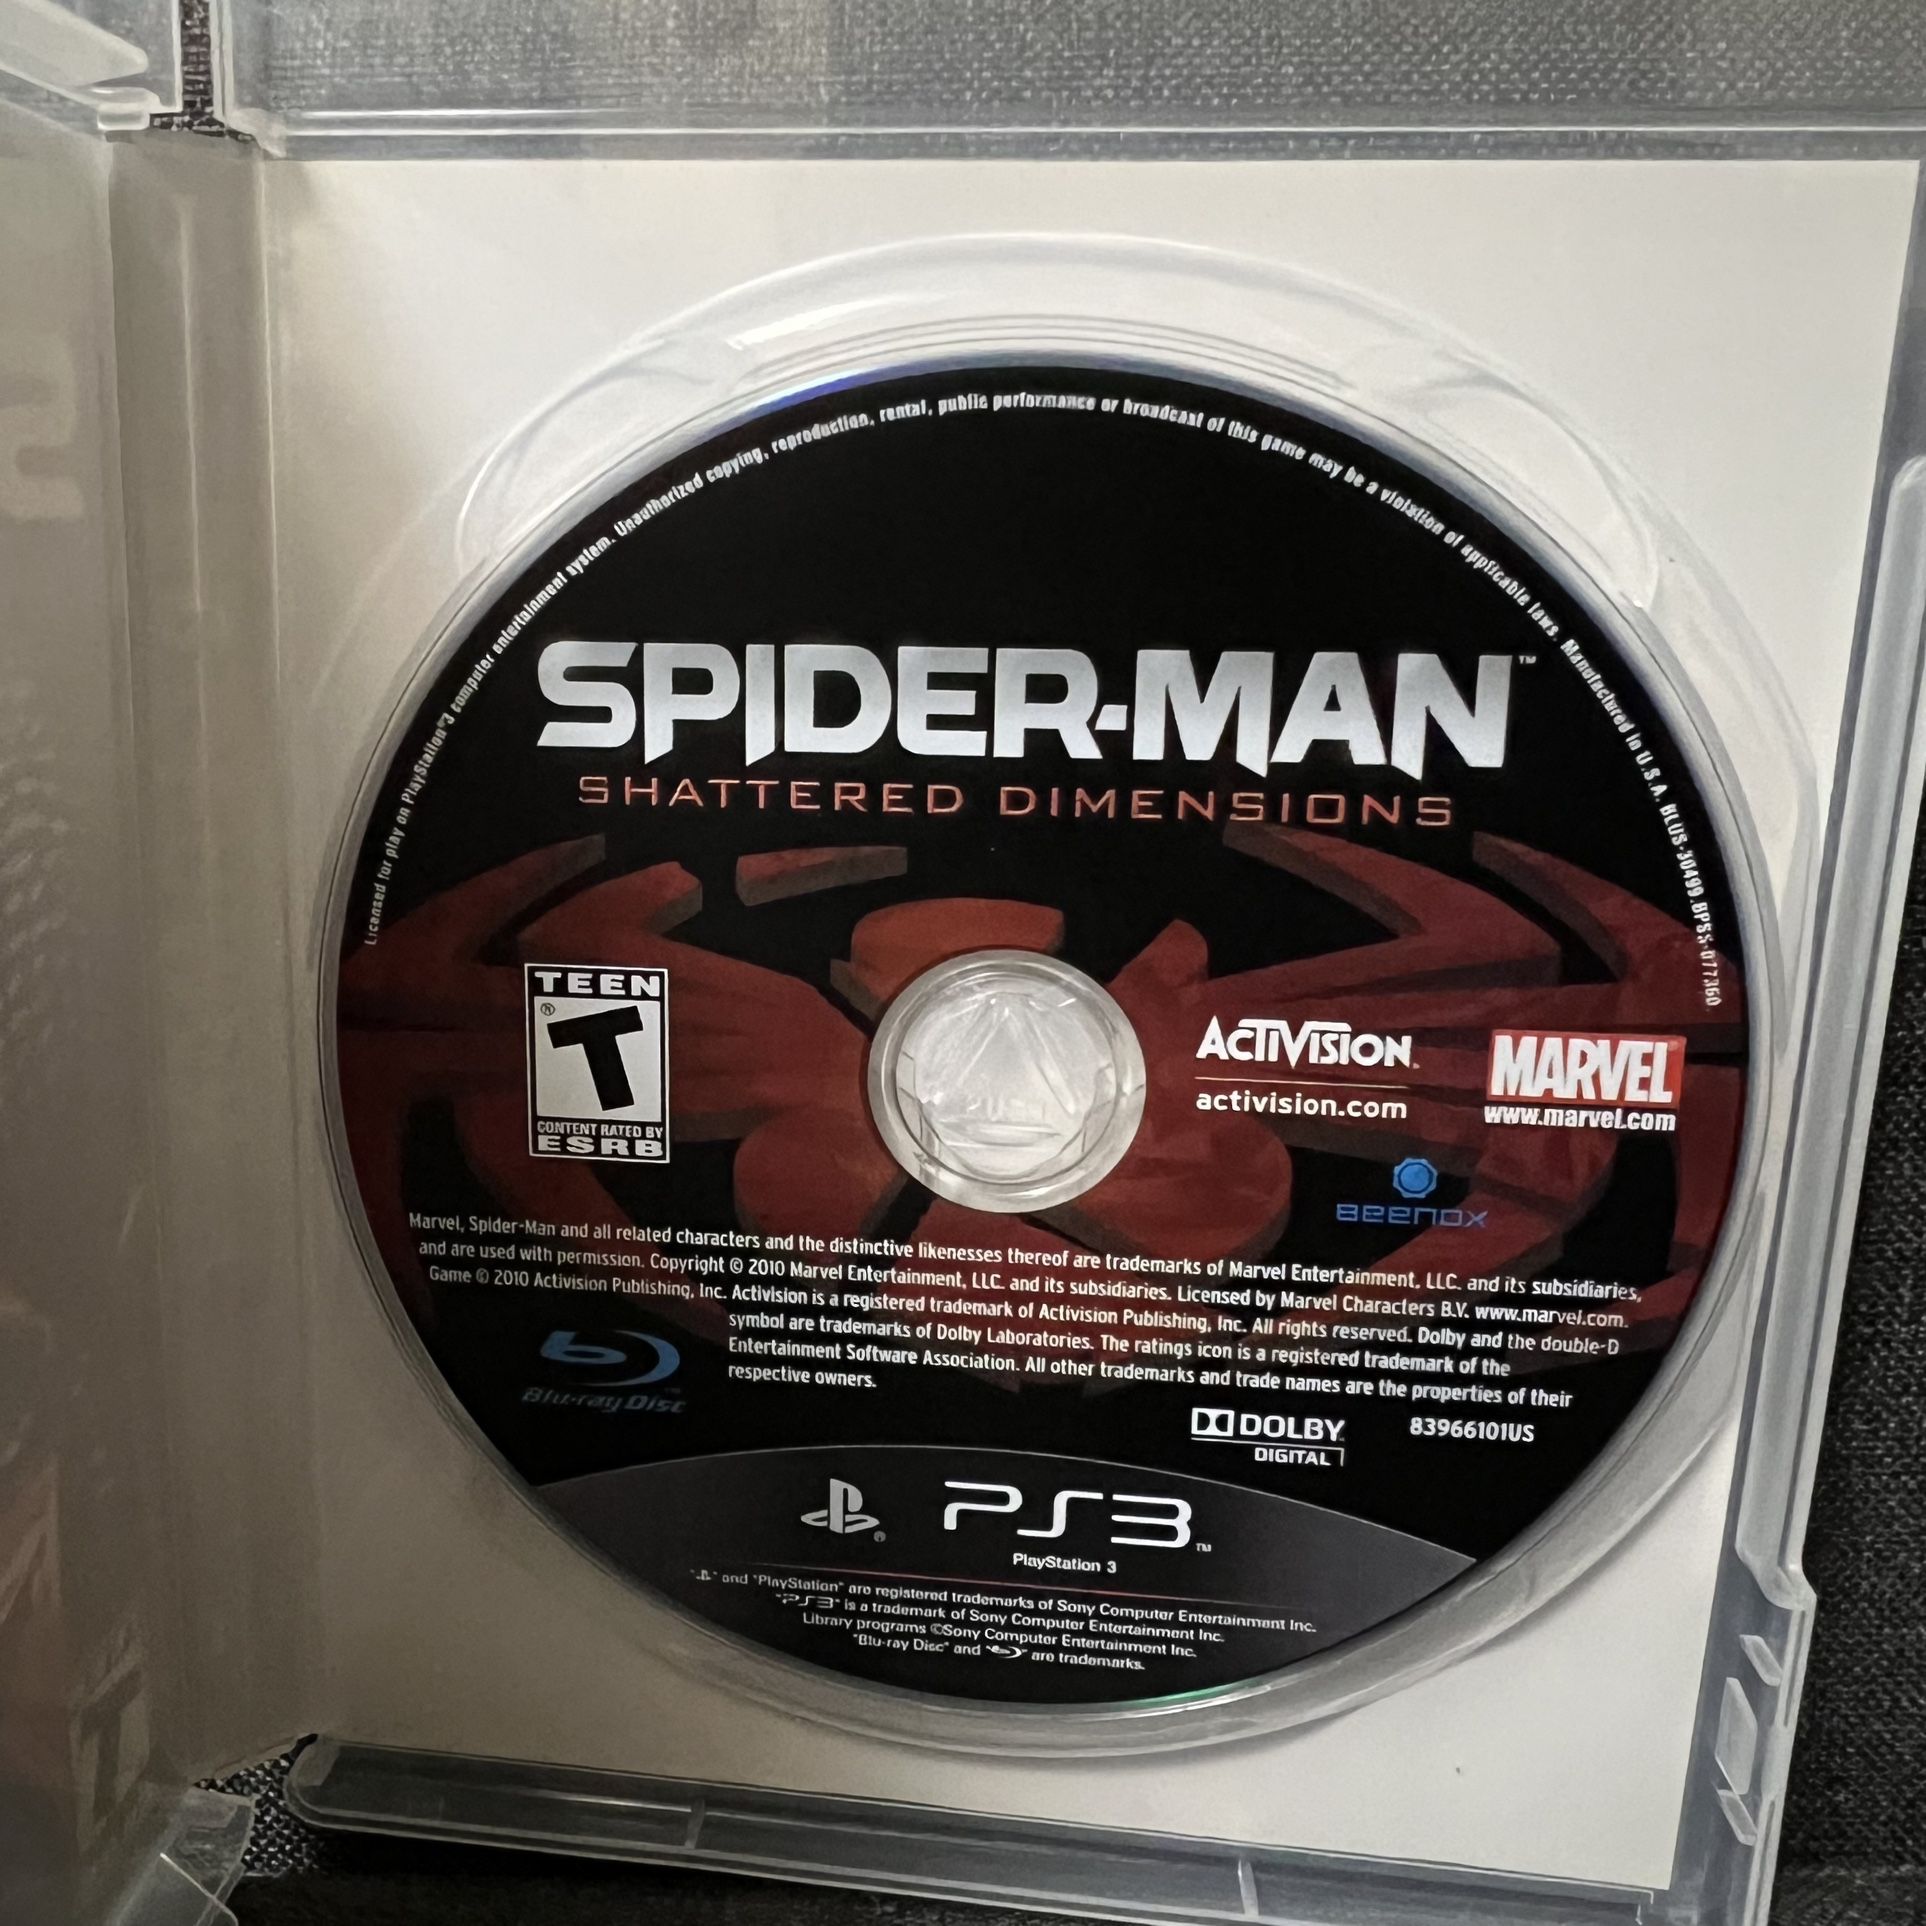  Spider-Man: Shattered Dimensions - Playstation 3